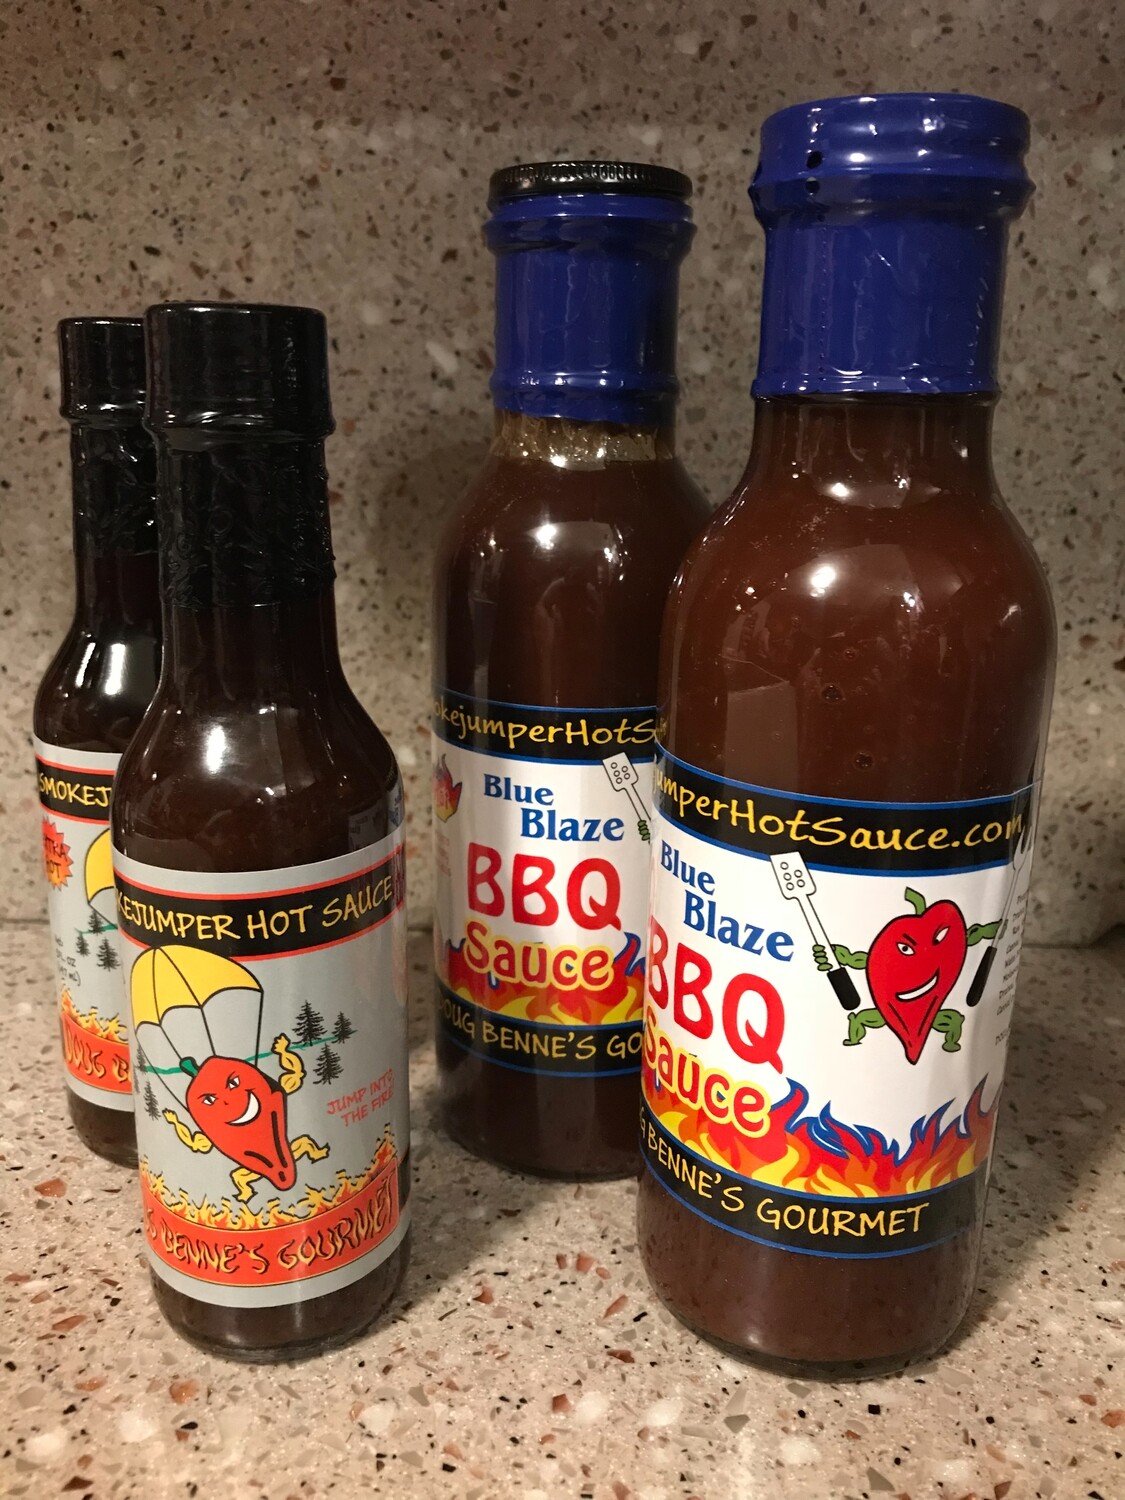 Extra Hot plus Blue Blaze BBQ Sauce